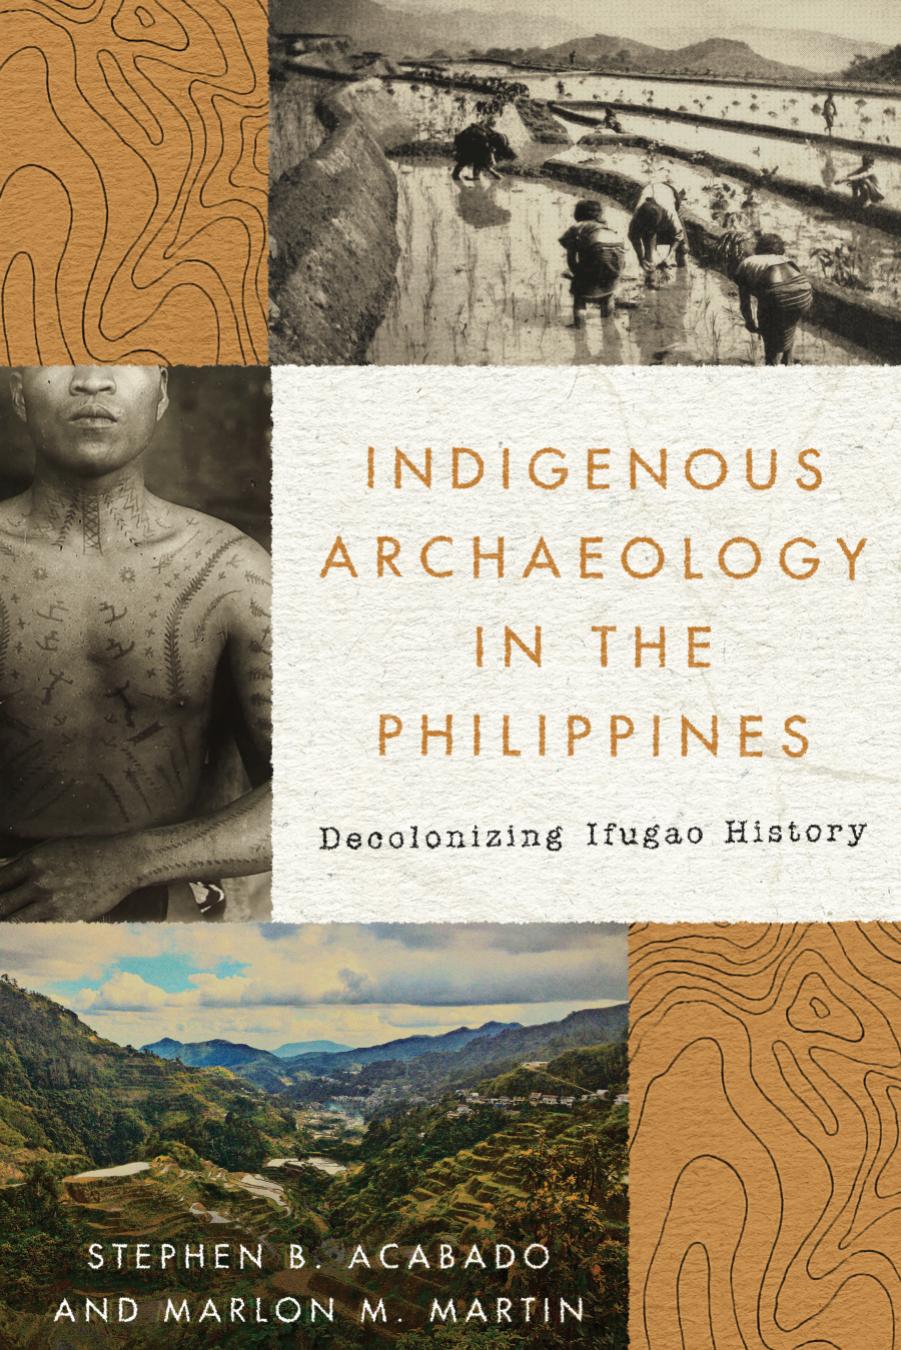 Indigenous Archaeology in the Philippines: Decolonizing Ifugao History by Stephen Acabado Marlon Martin